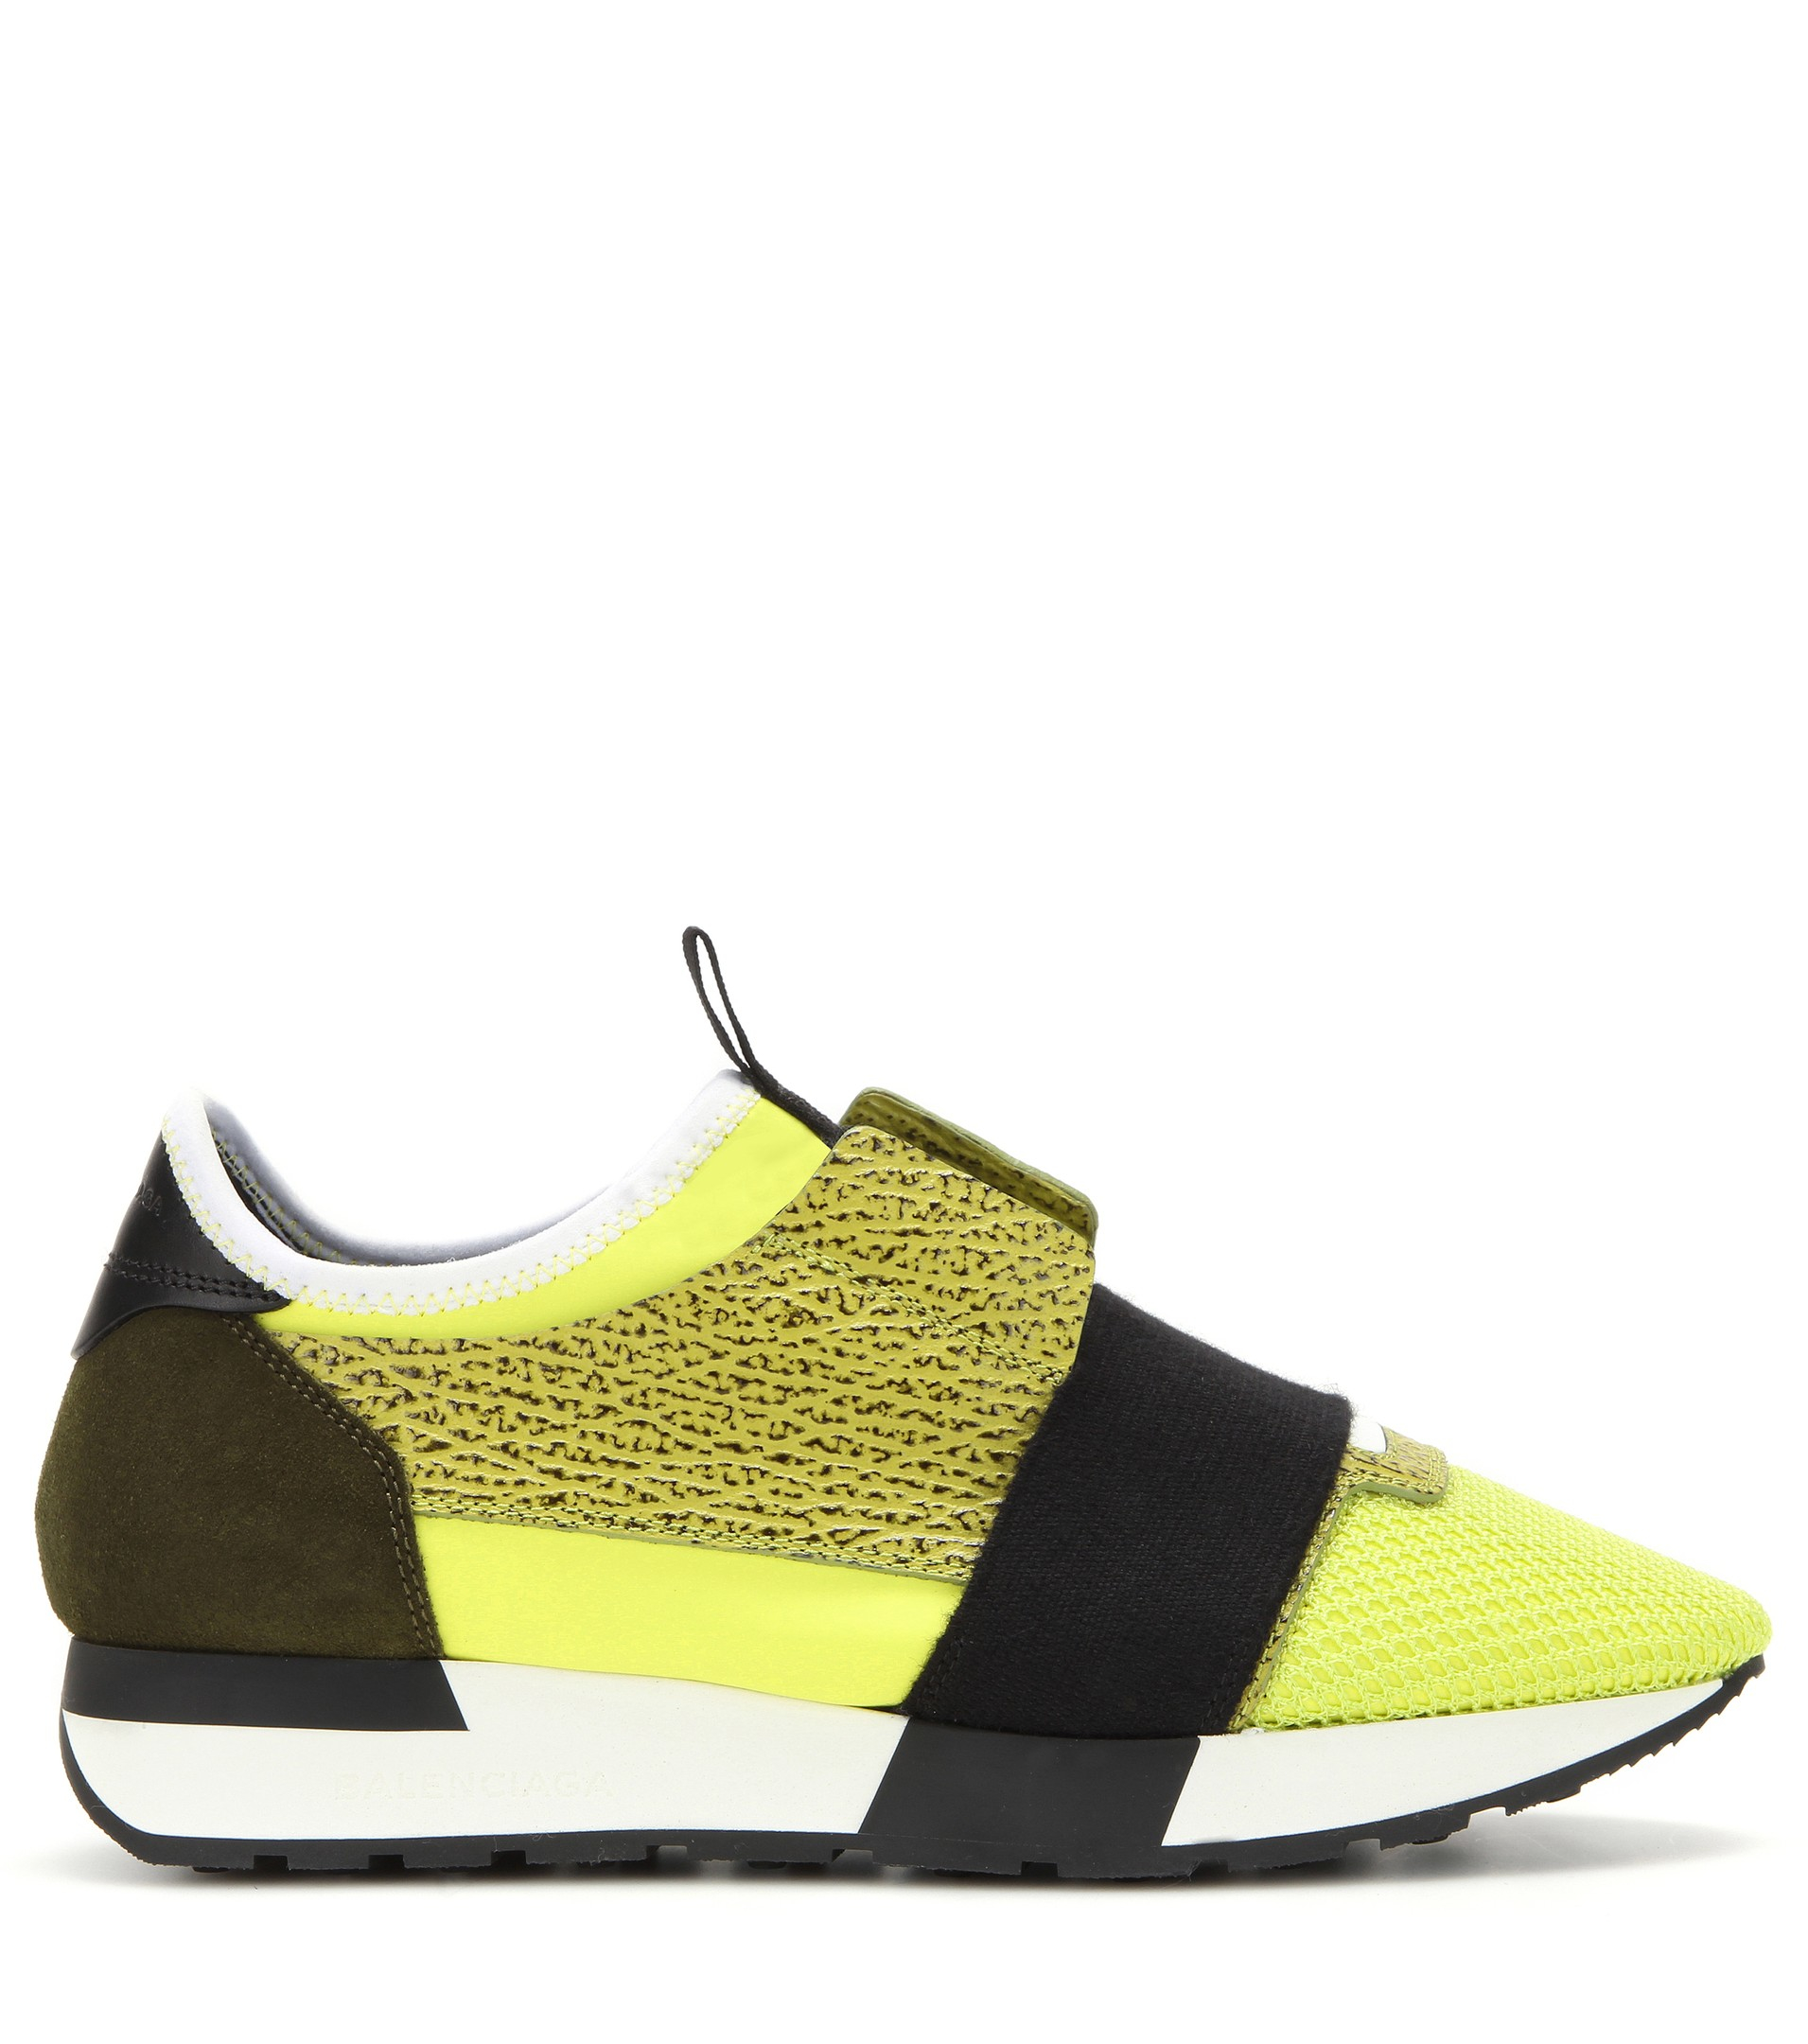 Balenciaga Runner Race Sneakers in j/j/j/nr/vk/nr/bl/nr (Yellow) - Lyst